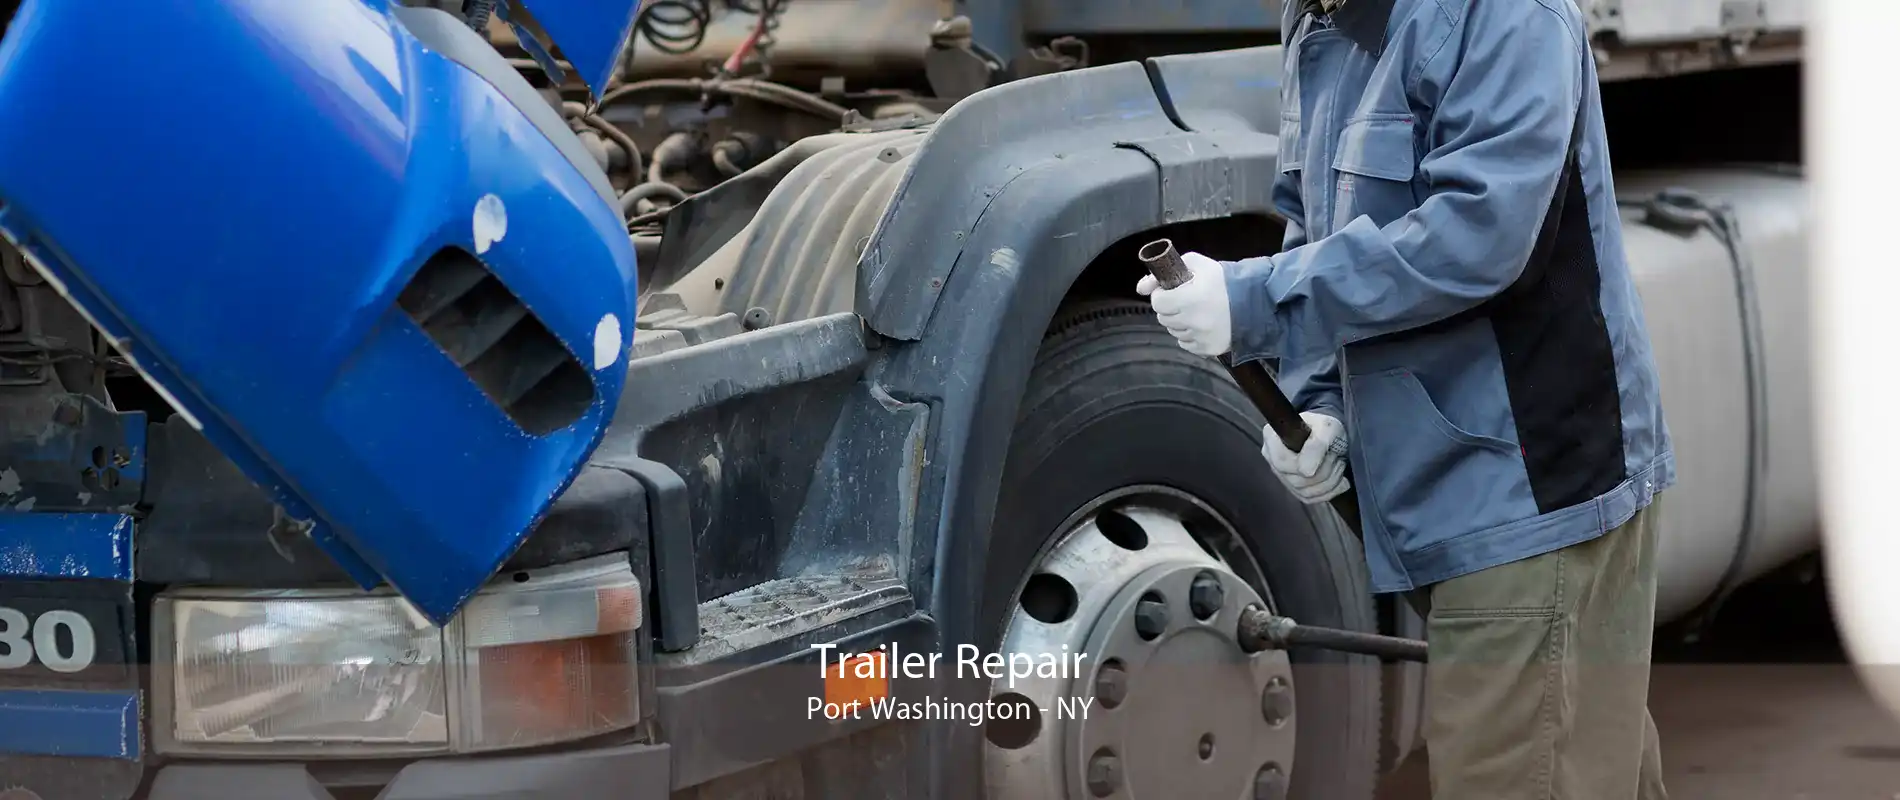 Trailer Repair Port Washington - NY